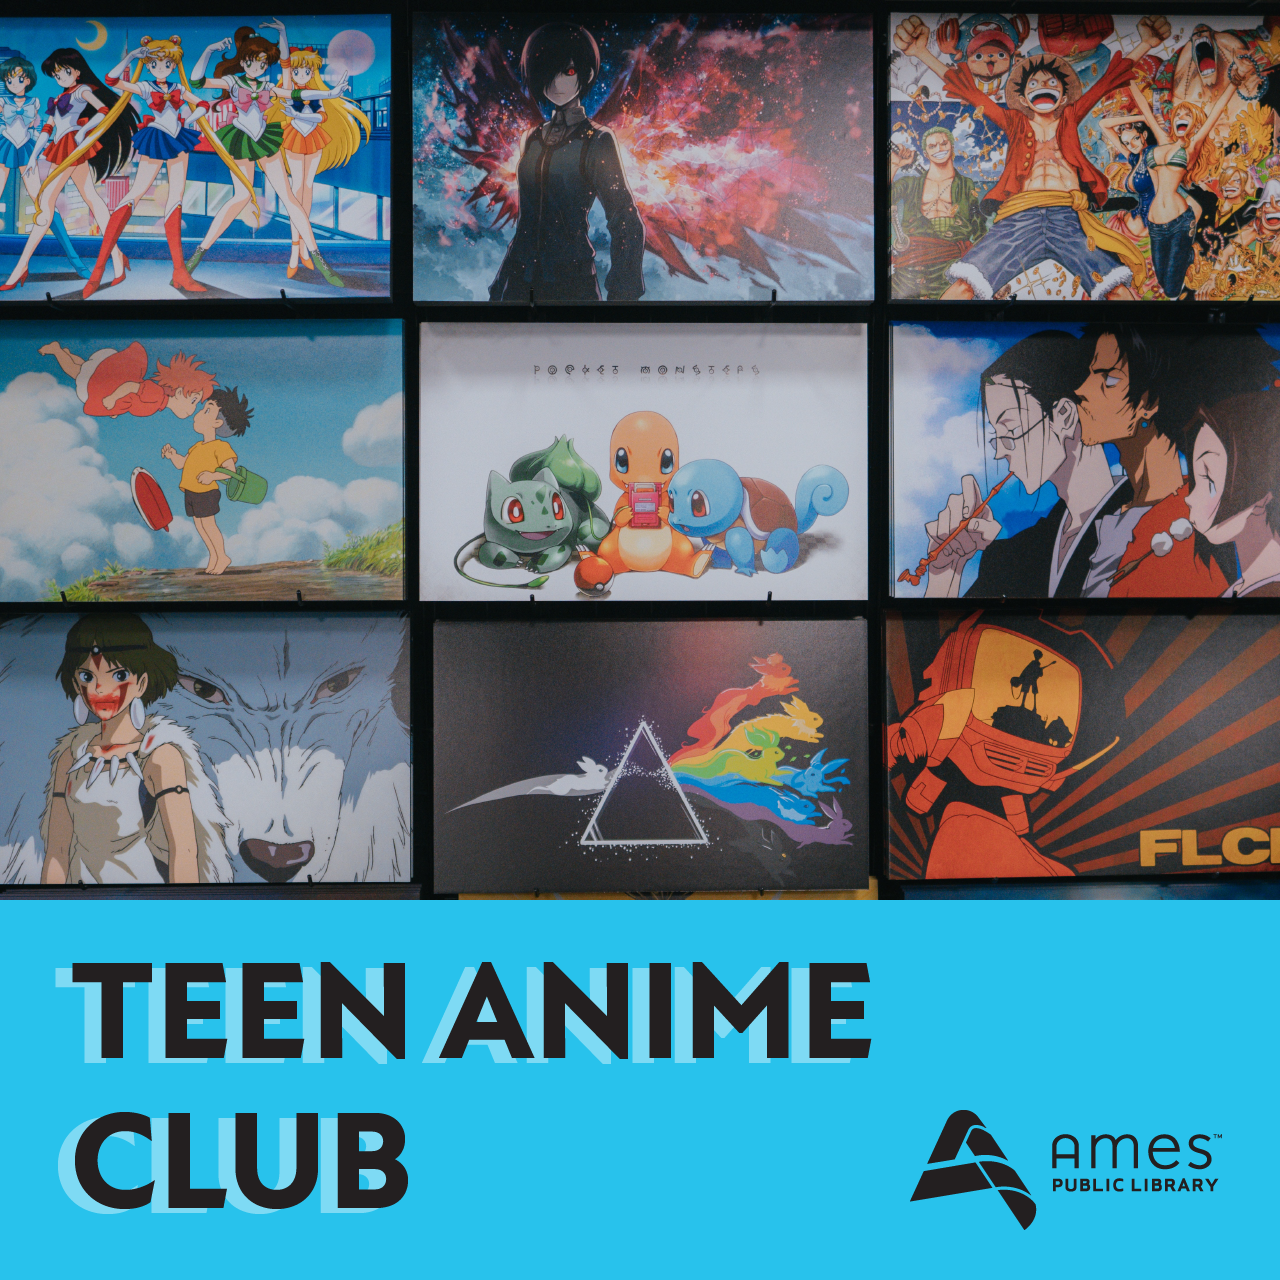 Anime Club for grades 5-12 | Swanton Public Library